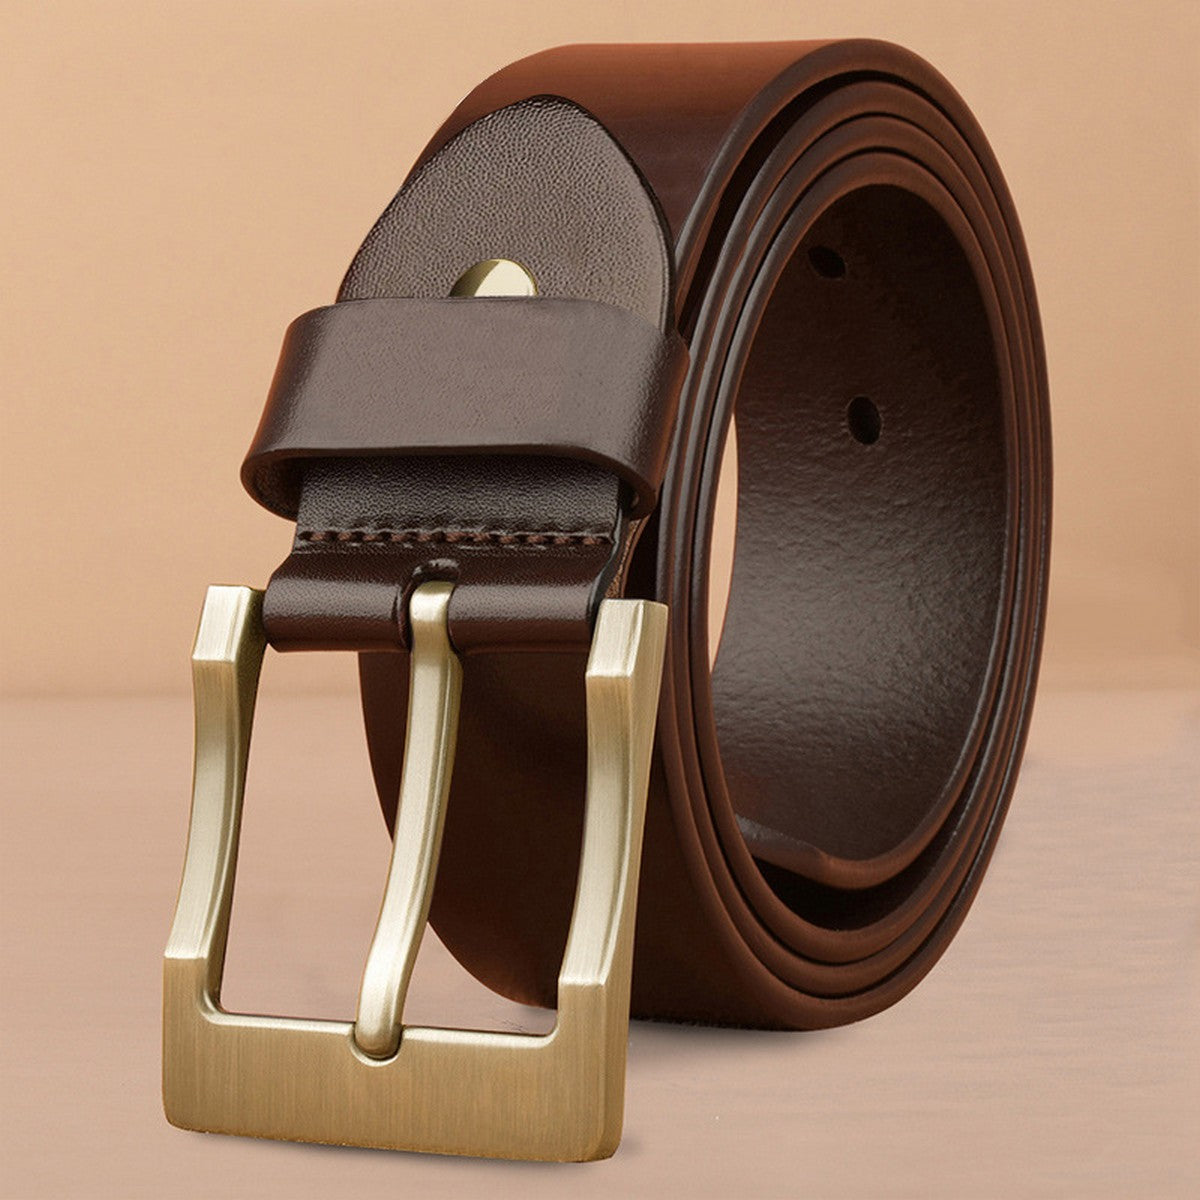 Retro casual leather belt